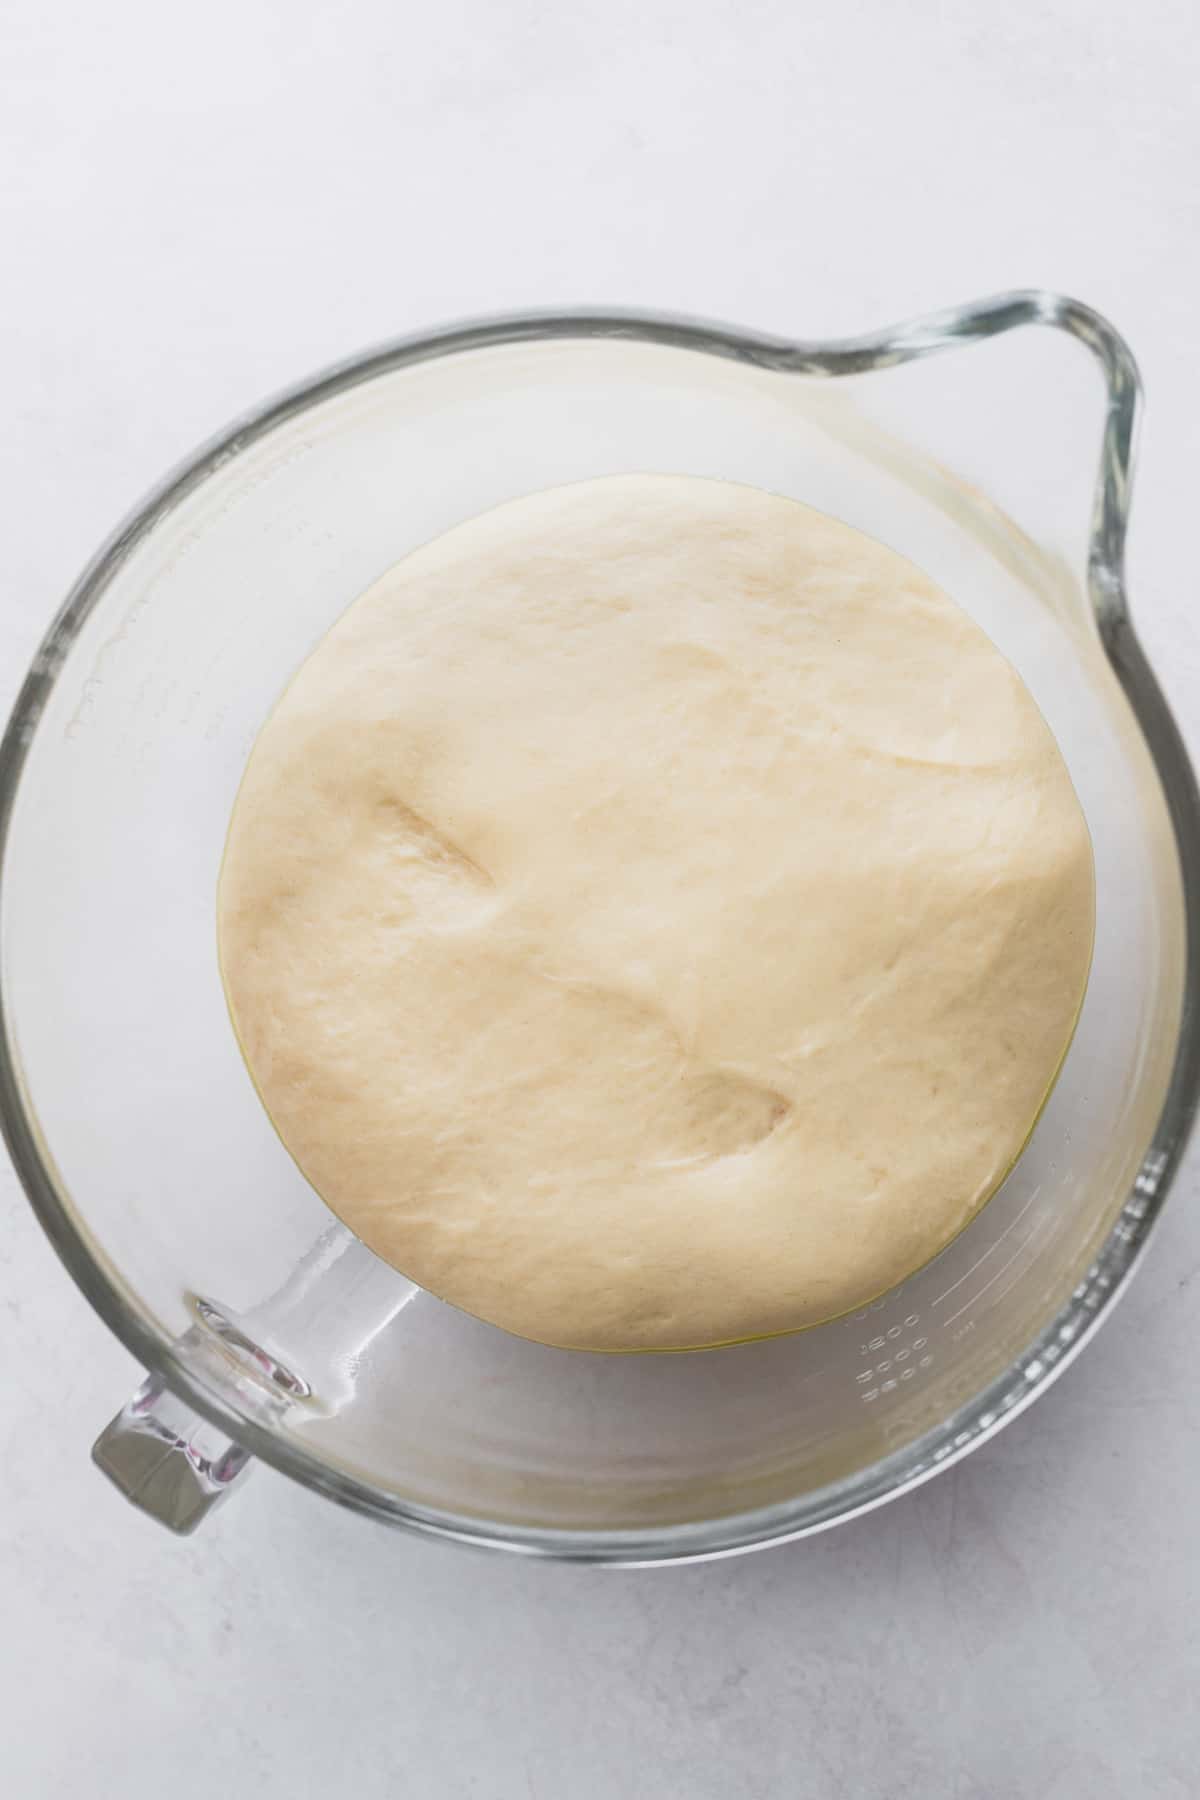 Dough in a glass bowl.